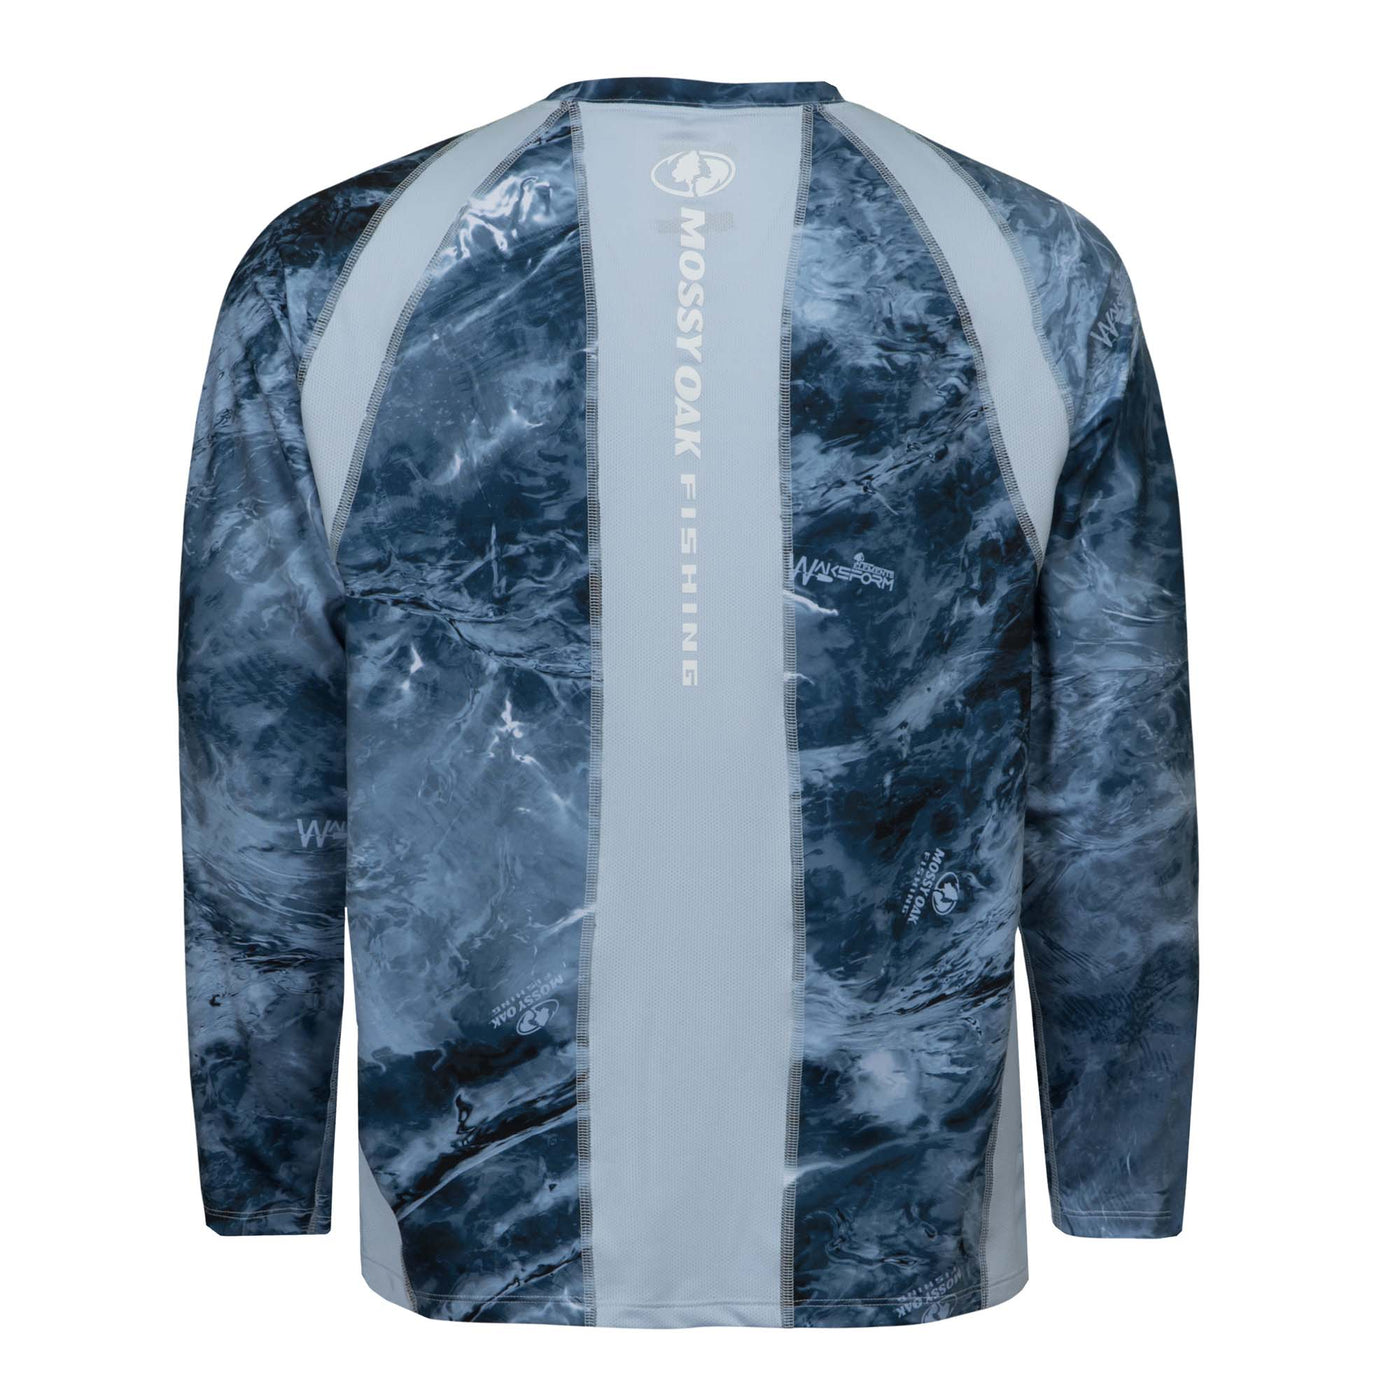 Long Sleeve Fishing Shirts--Performance Hydroplex Technology – The